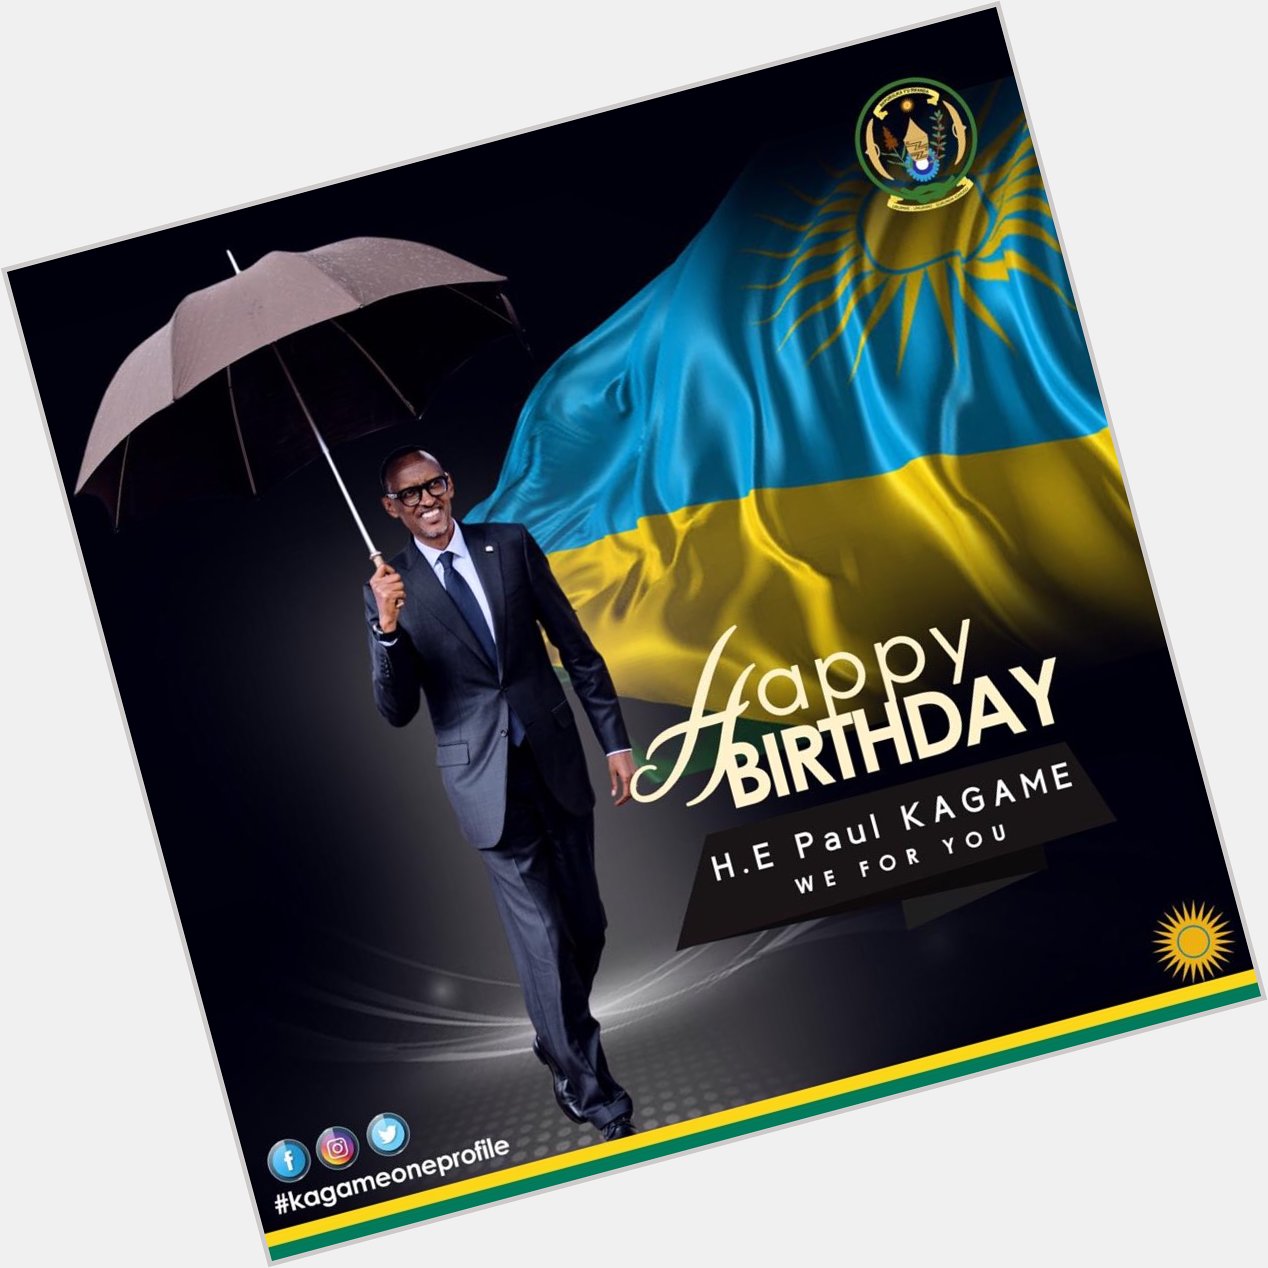 Happy Birthday H.E Paul Kagame... 